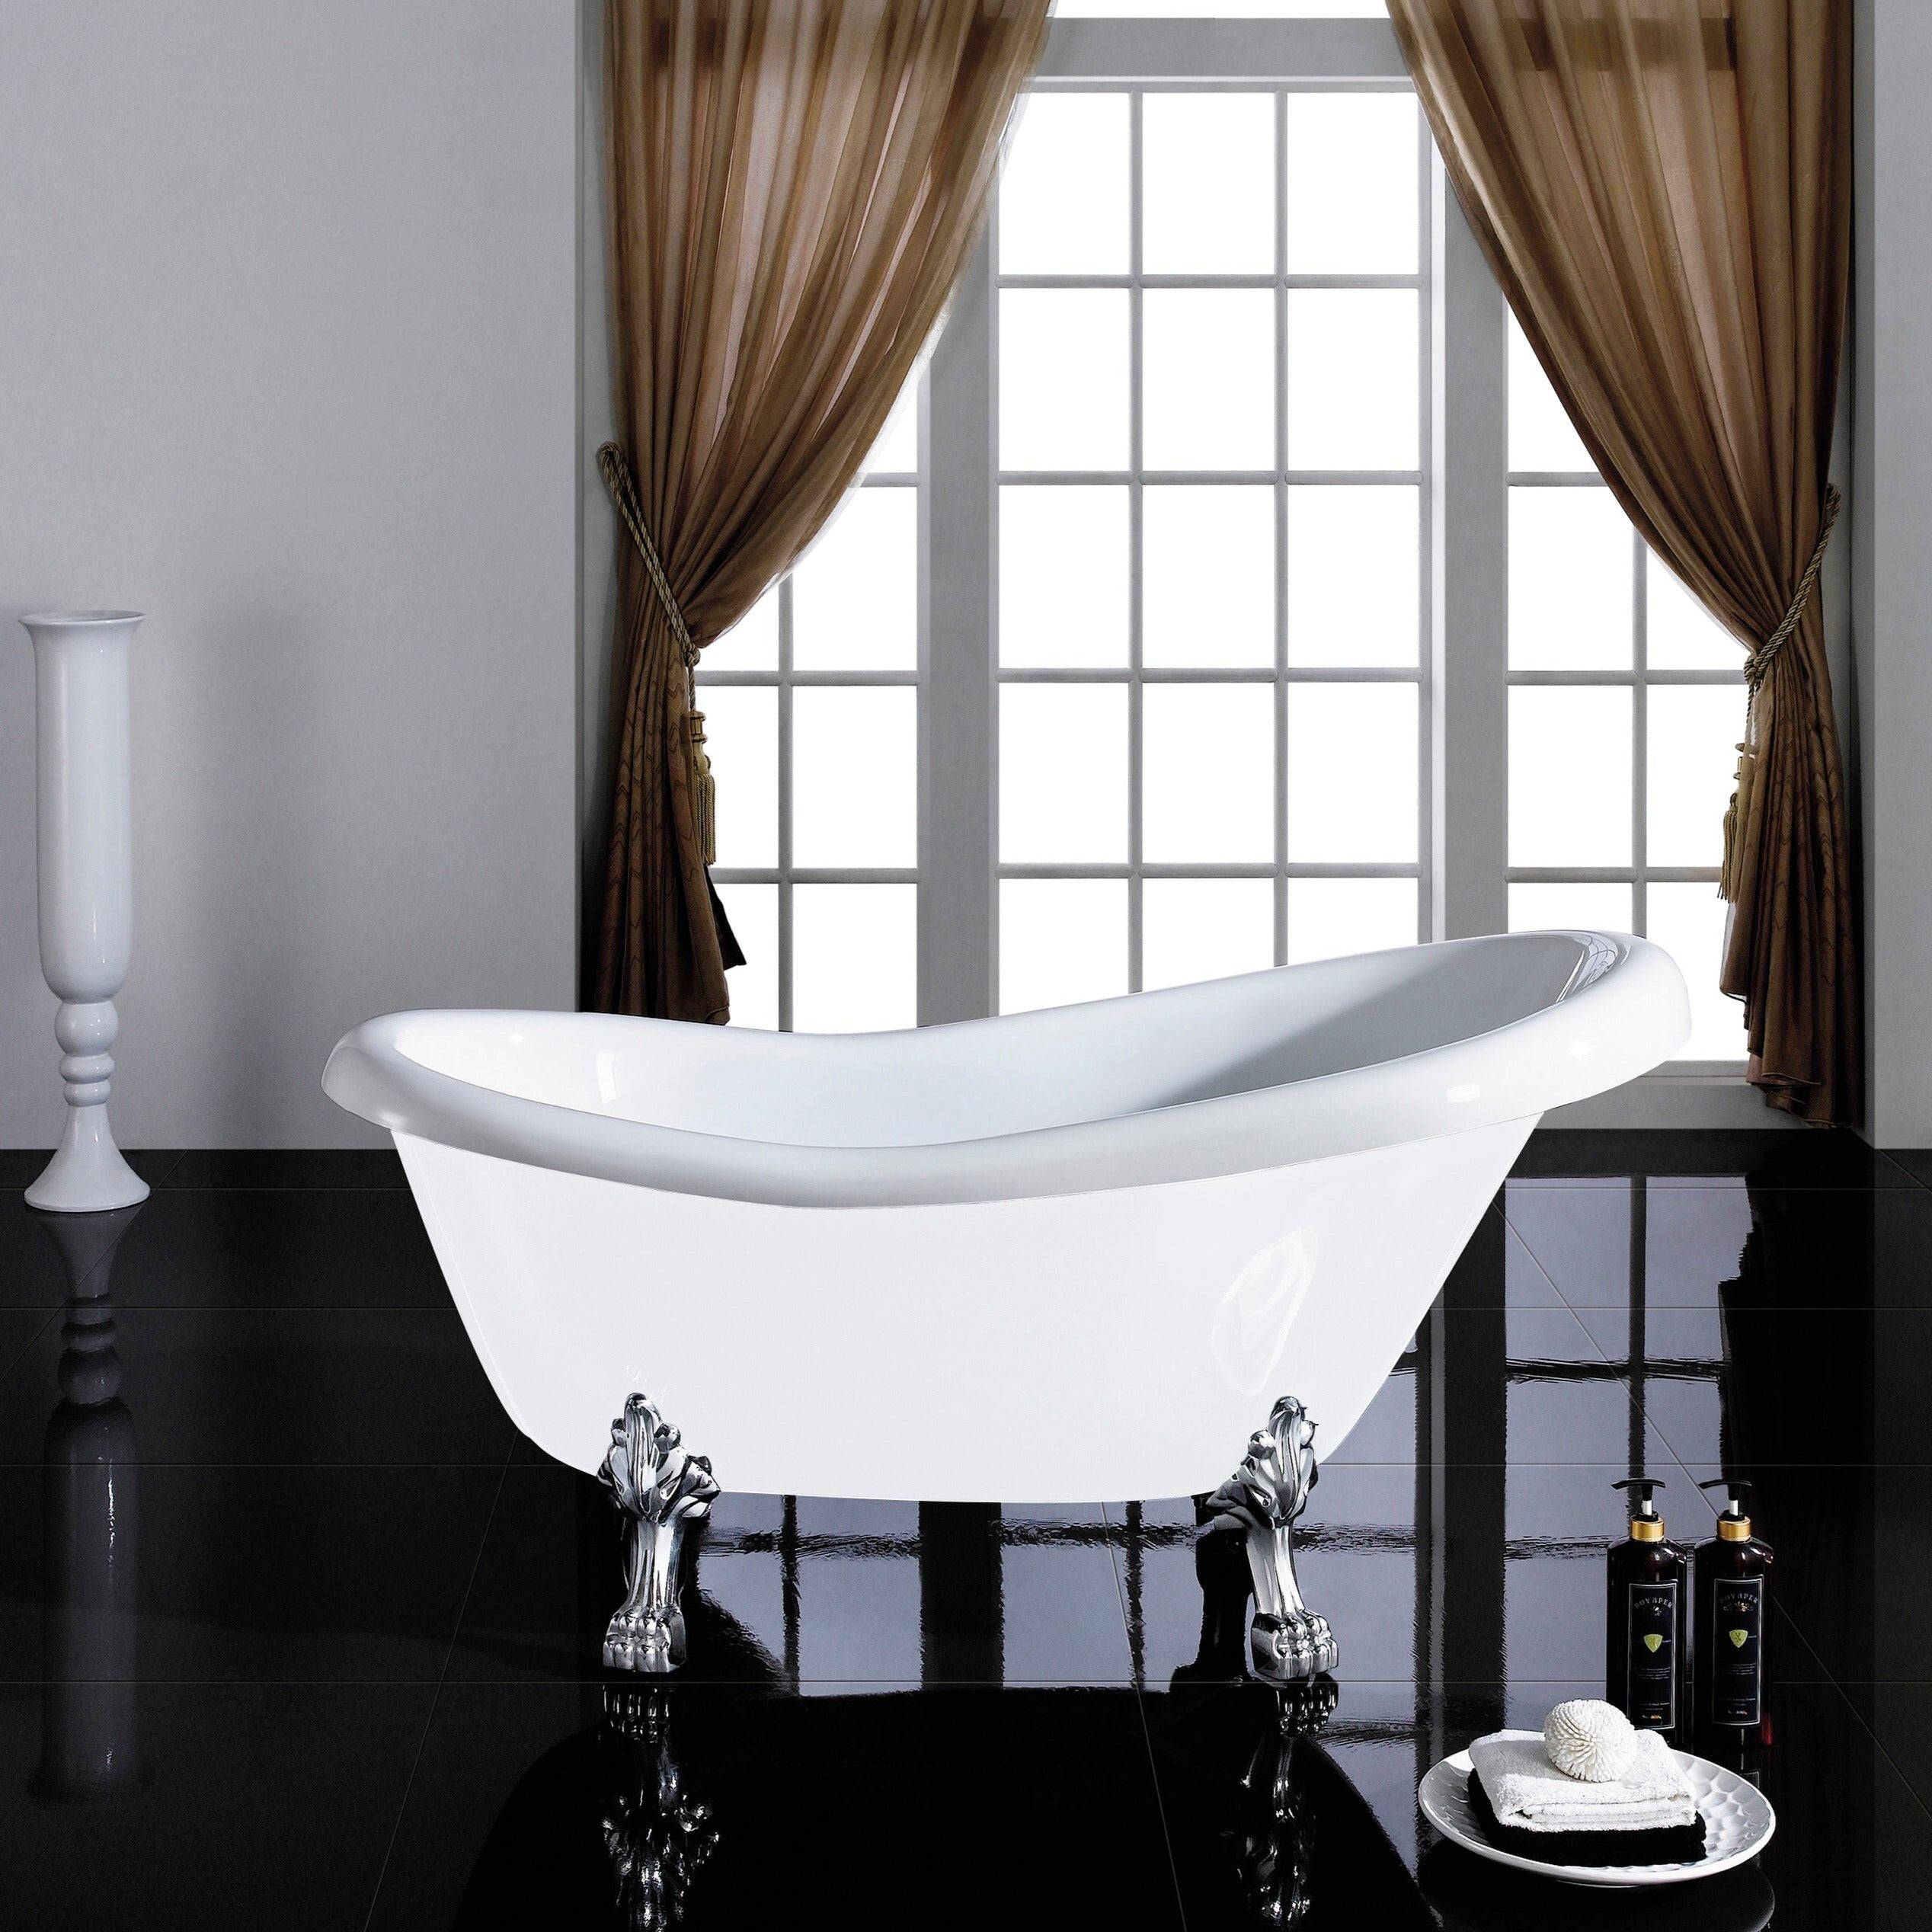 POSEIDON ESPADA CLAW FOOT BATHTUB GLOSS WHITE (AVAILABLE IN 1500MM AND 1680MM)